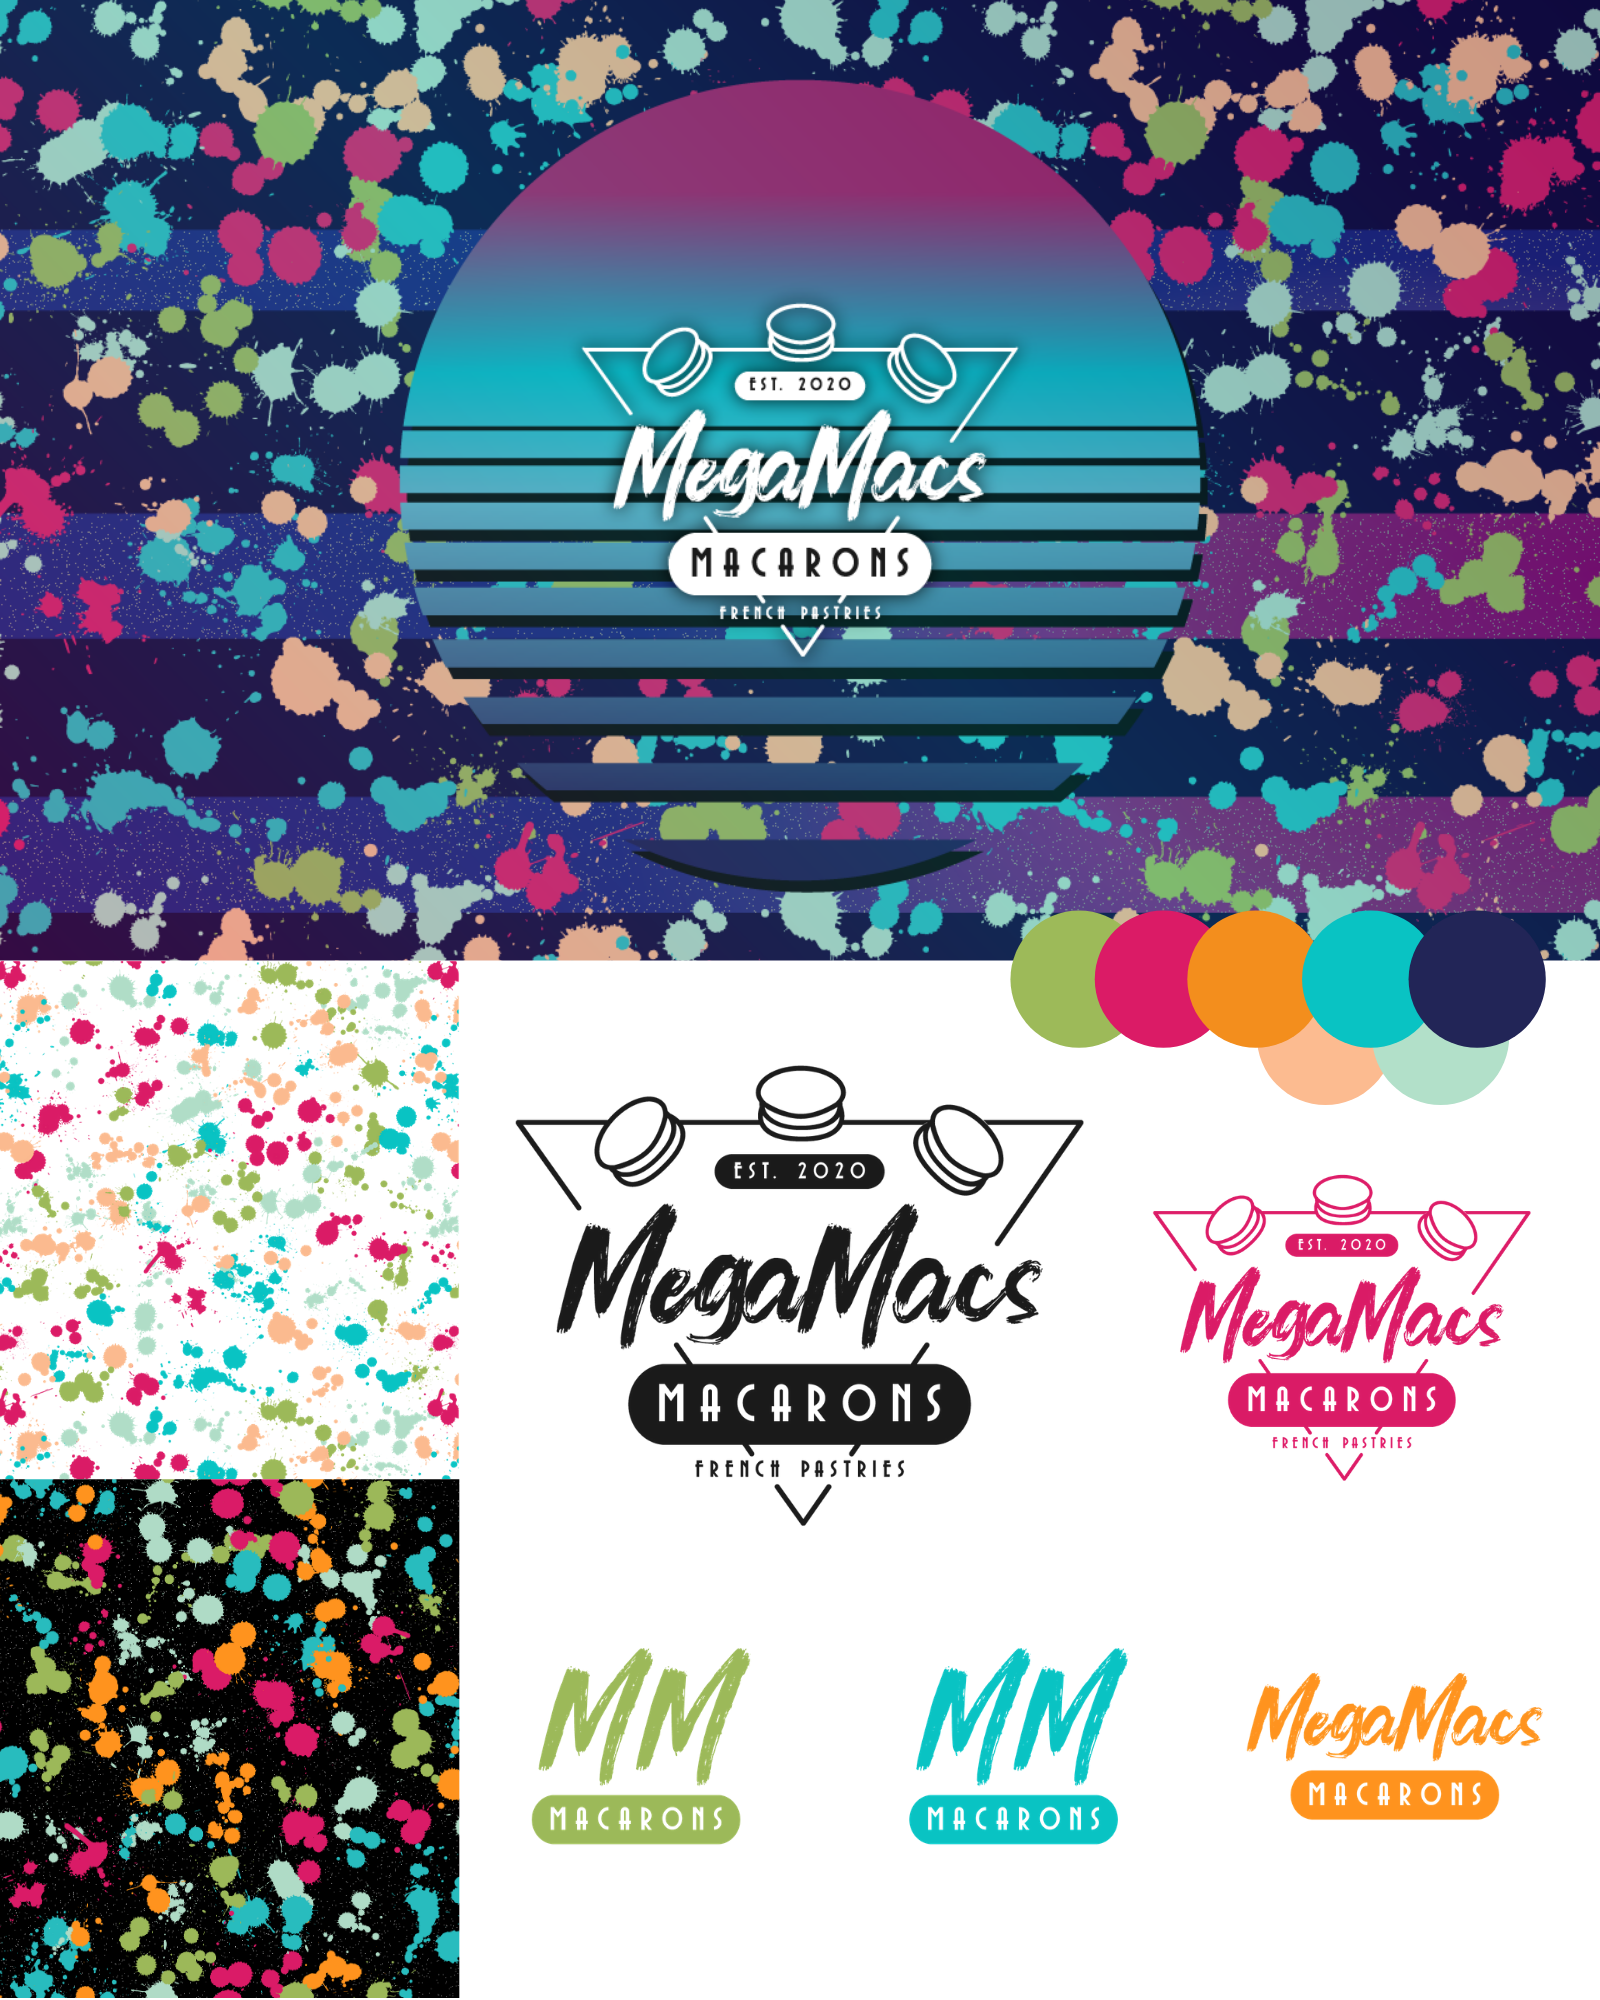 MegaMacs Macarons